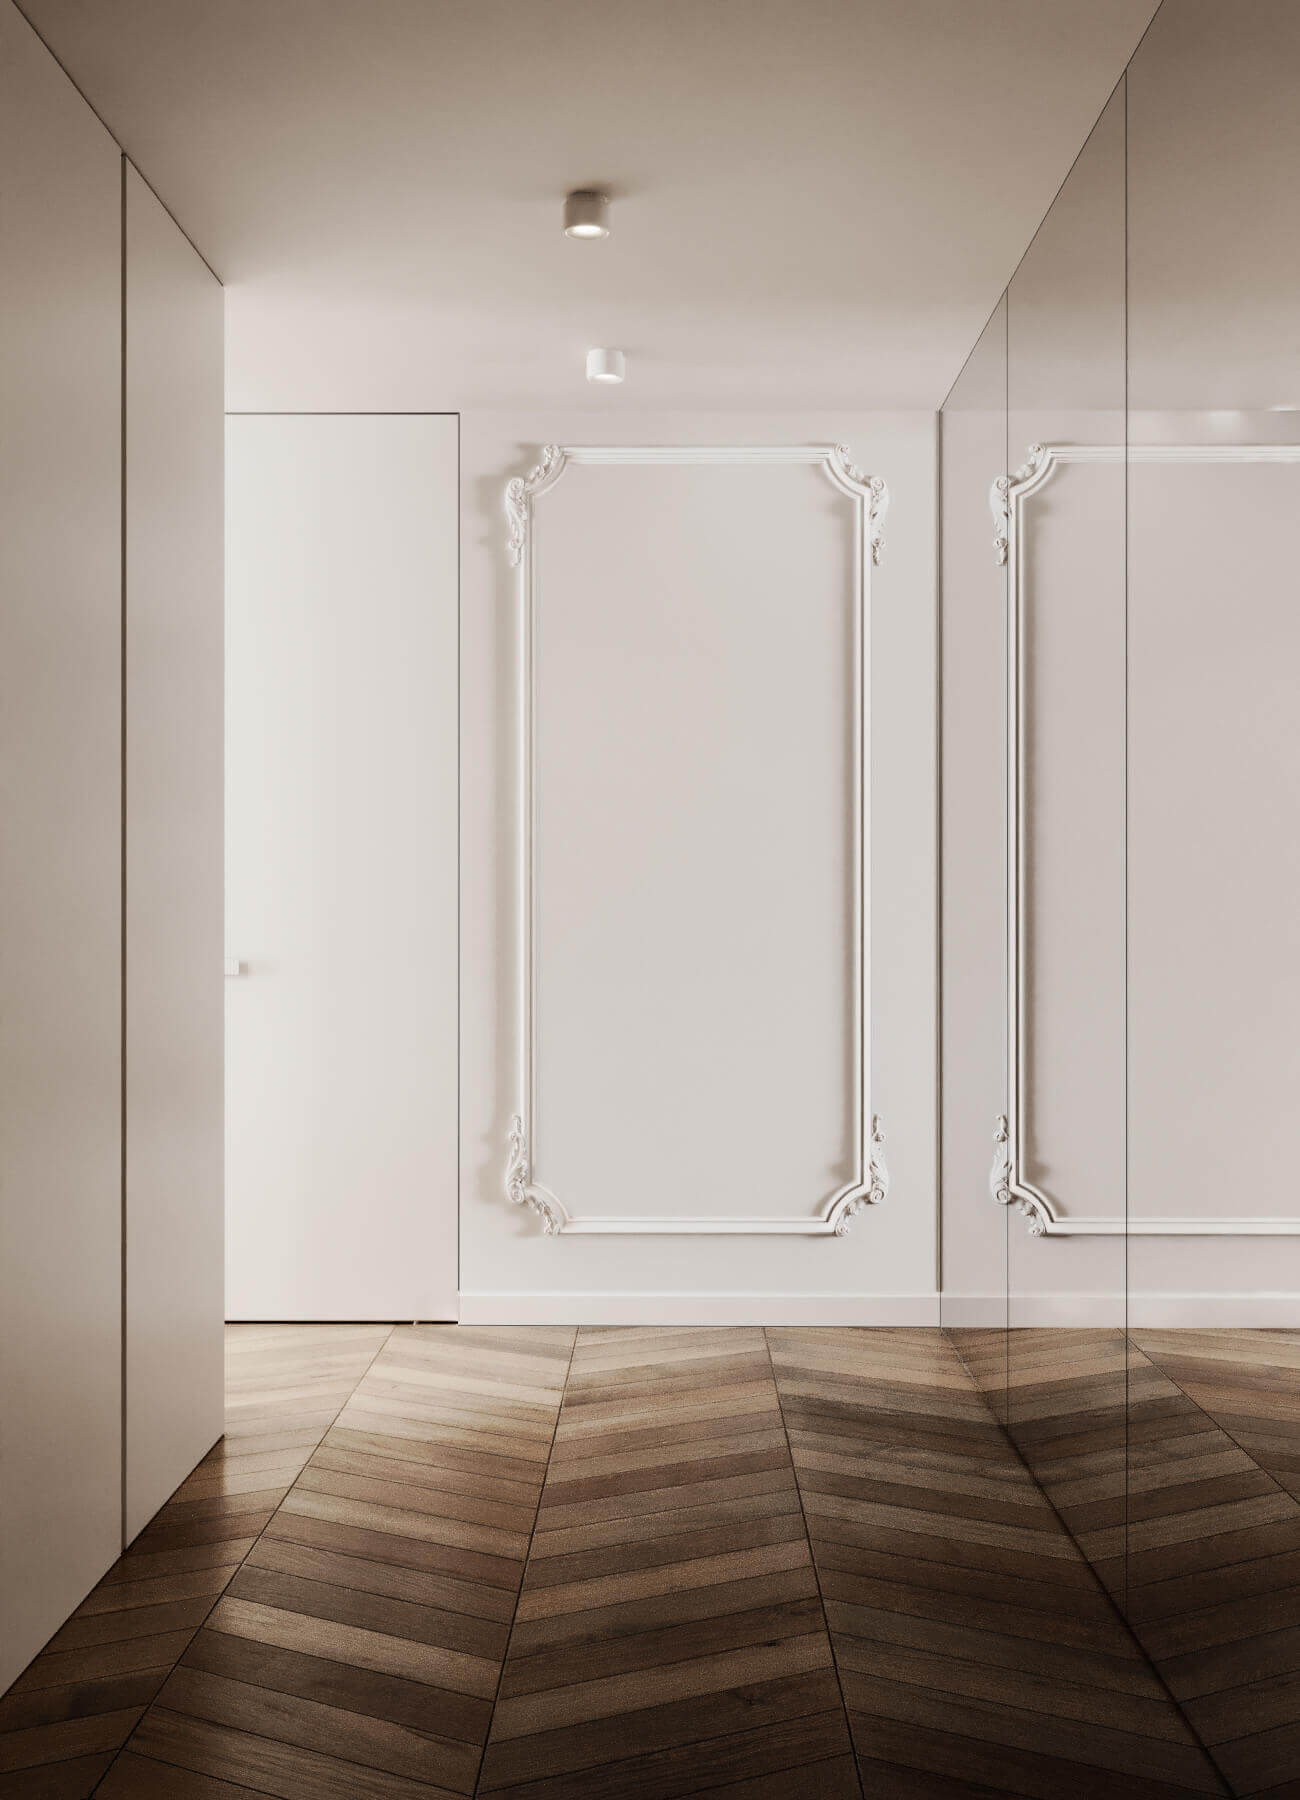 Bernardazzi Apartment clean corridor entrance - cgi visualization